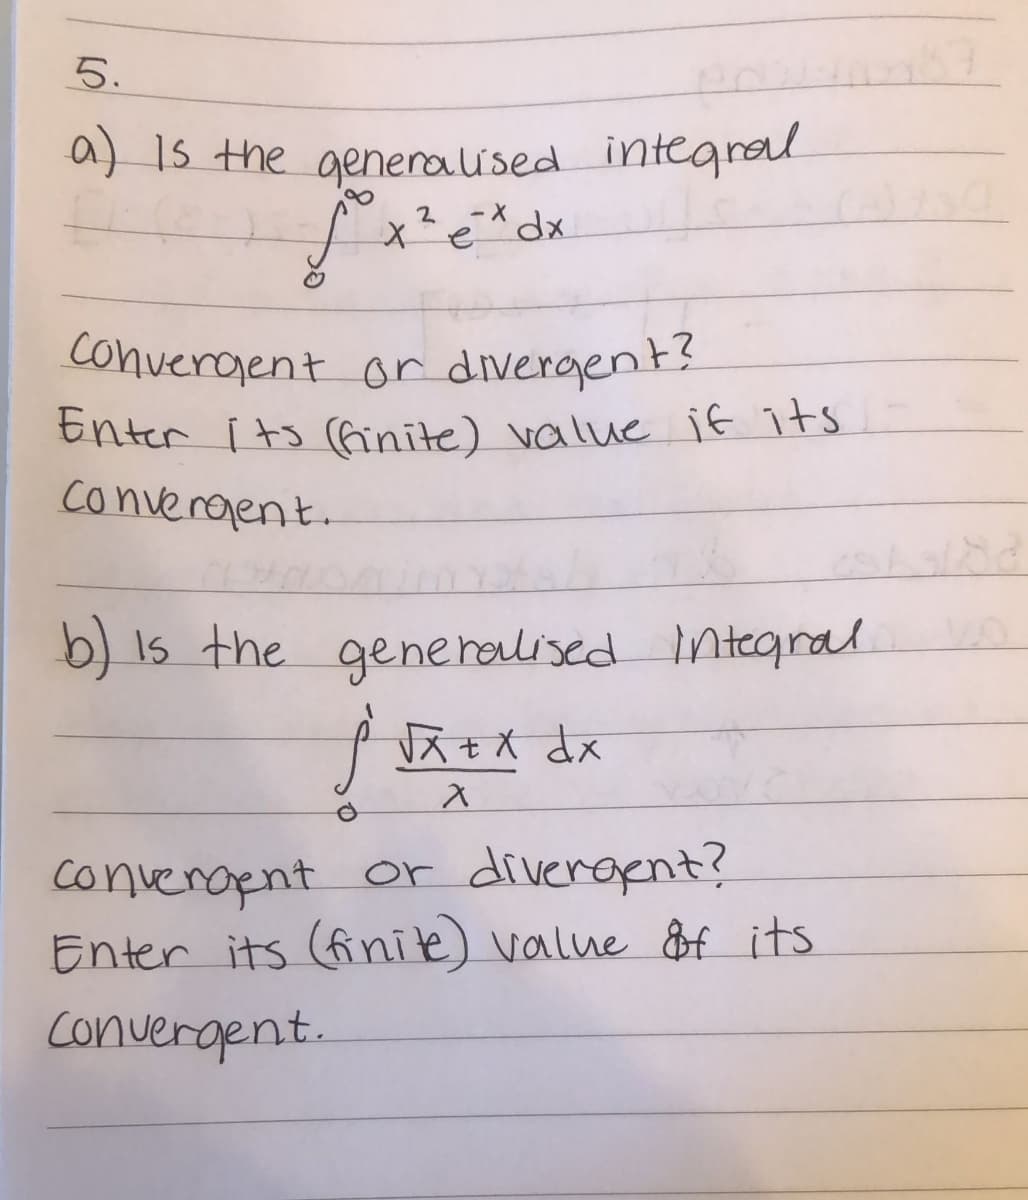 5.
a) 13 the generaised integrel
convergent or divergent?
tnter i ts finite) value if its
convergent.
b) is the gene holised
integral
converaent or diveraent?
Enter its (finile) value &f its
converoent.
